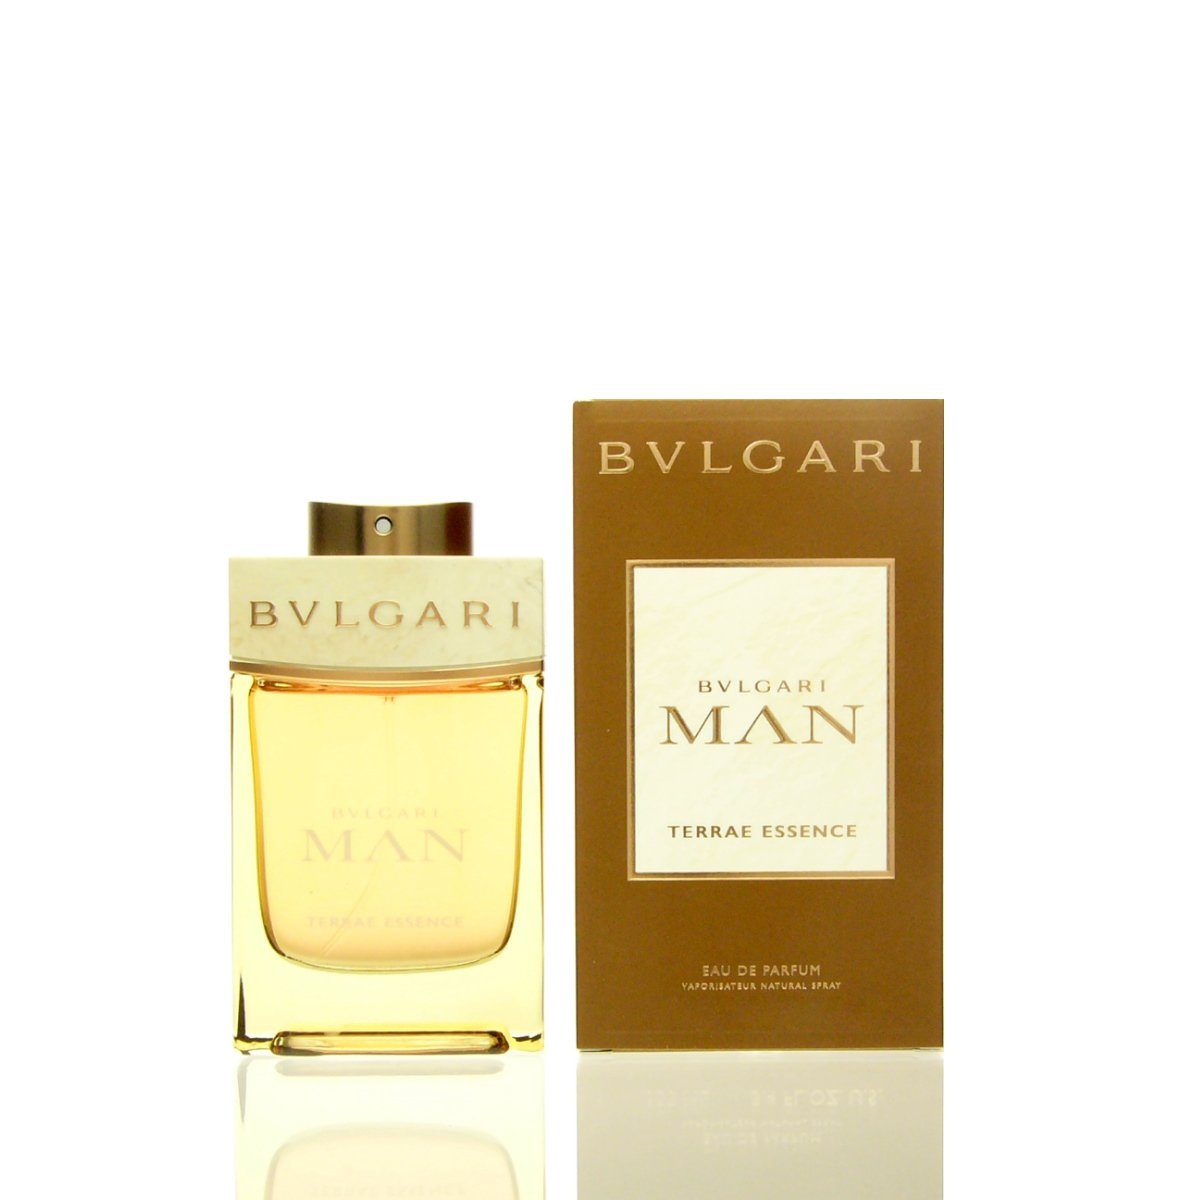 BVLGARI Eau Parfum Man Bvlgari Essence Eau de de ml 100 Terrae Parfum